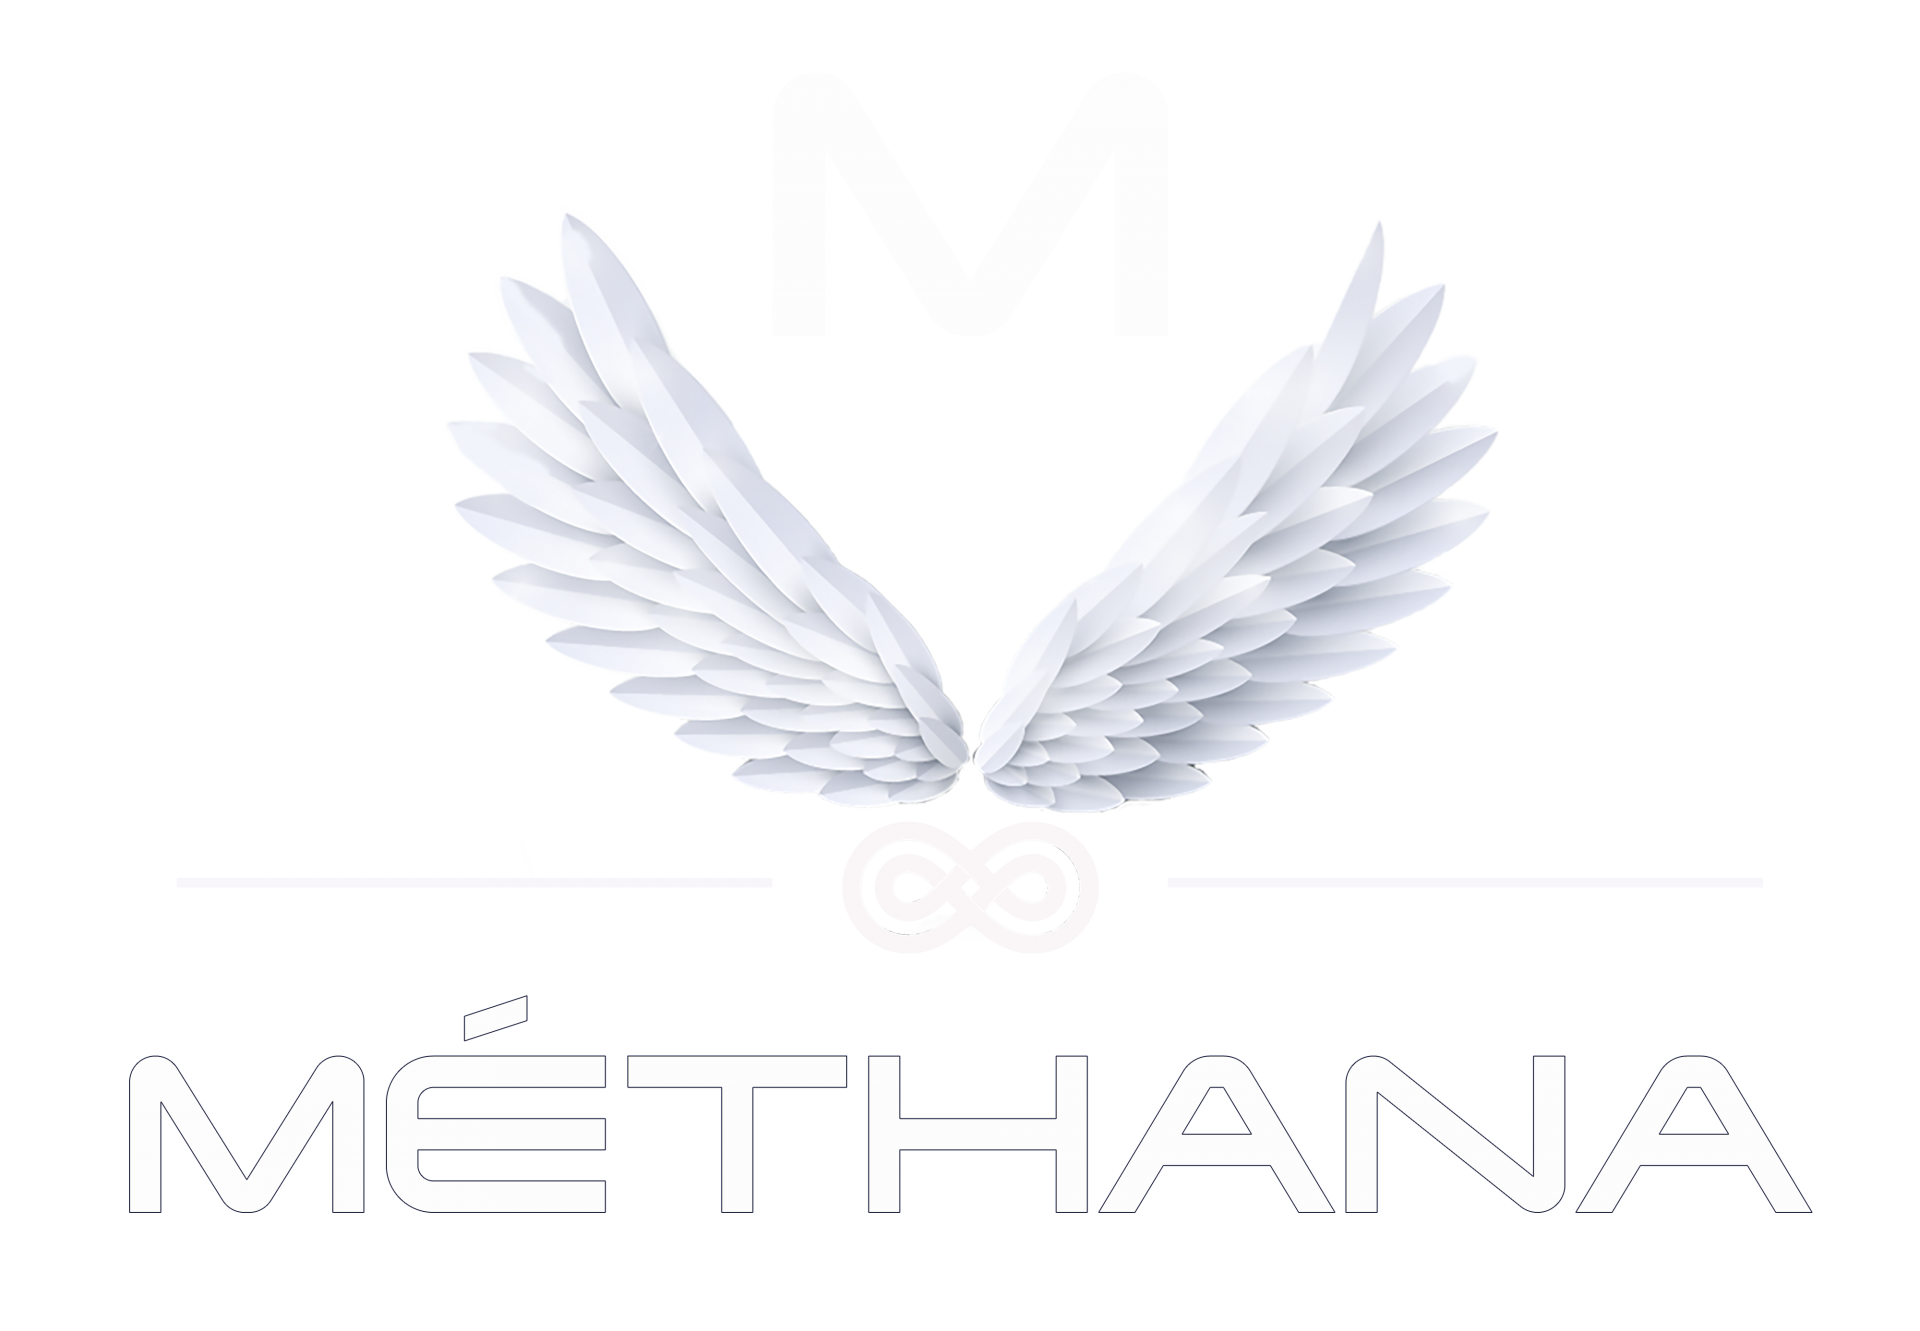 METHANA